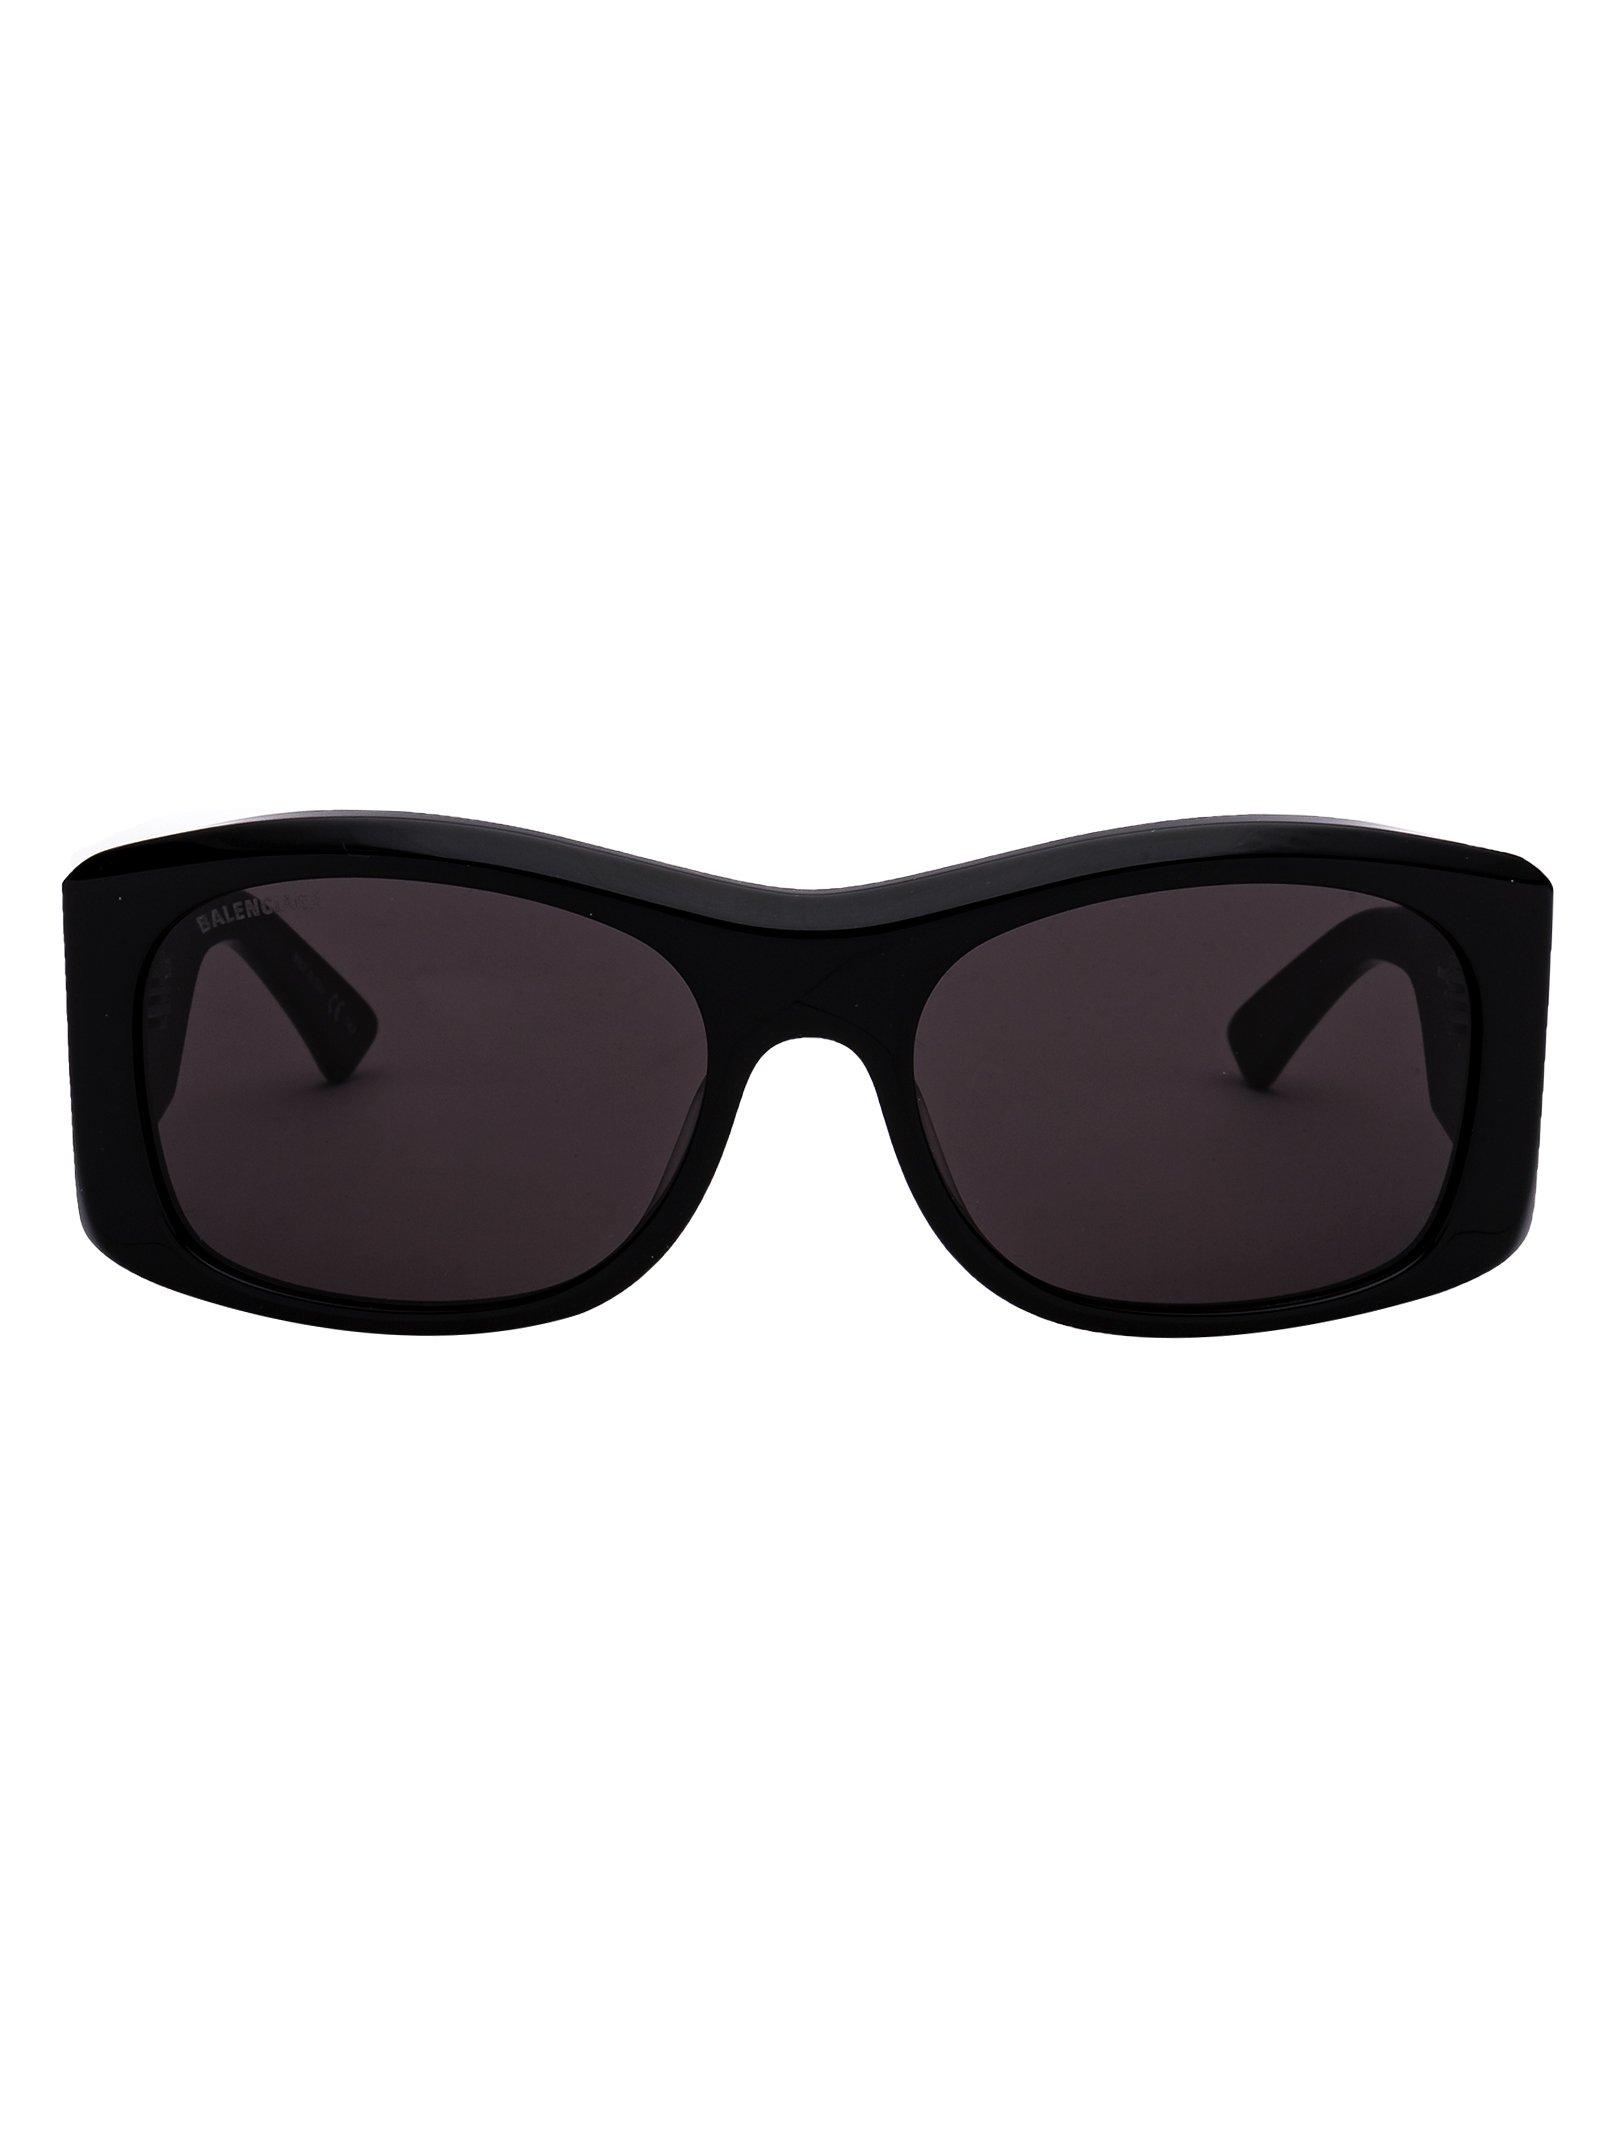 Balenciaga Rectangle Frame Sunglasses in Black - Lyst